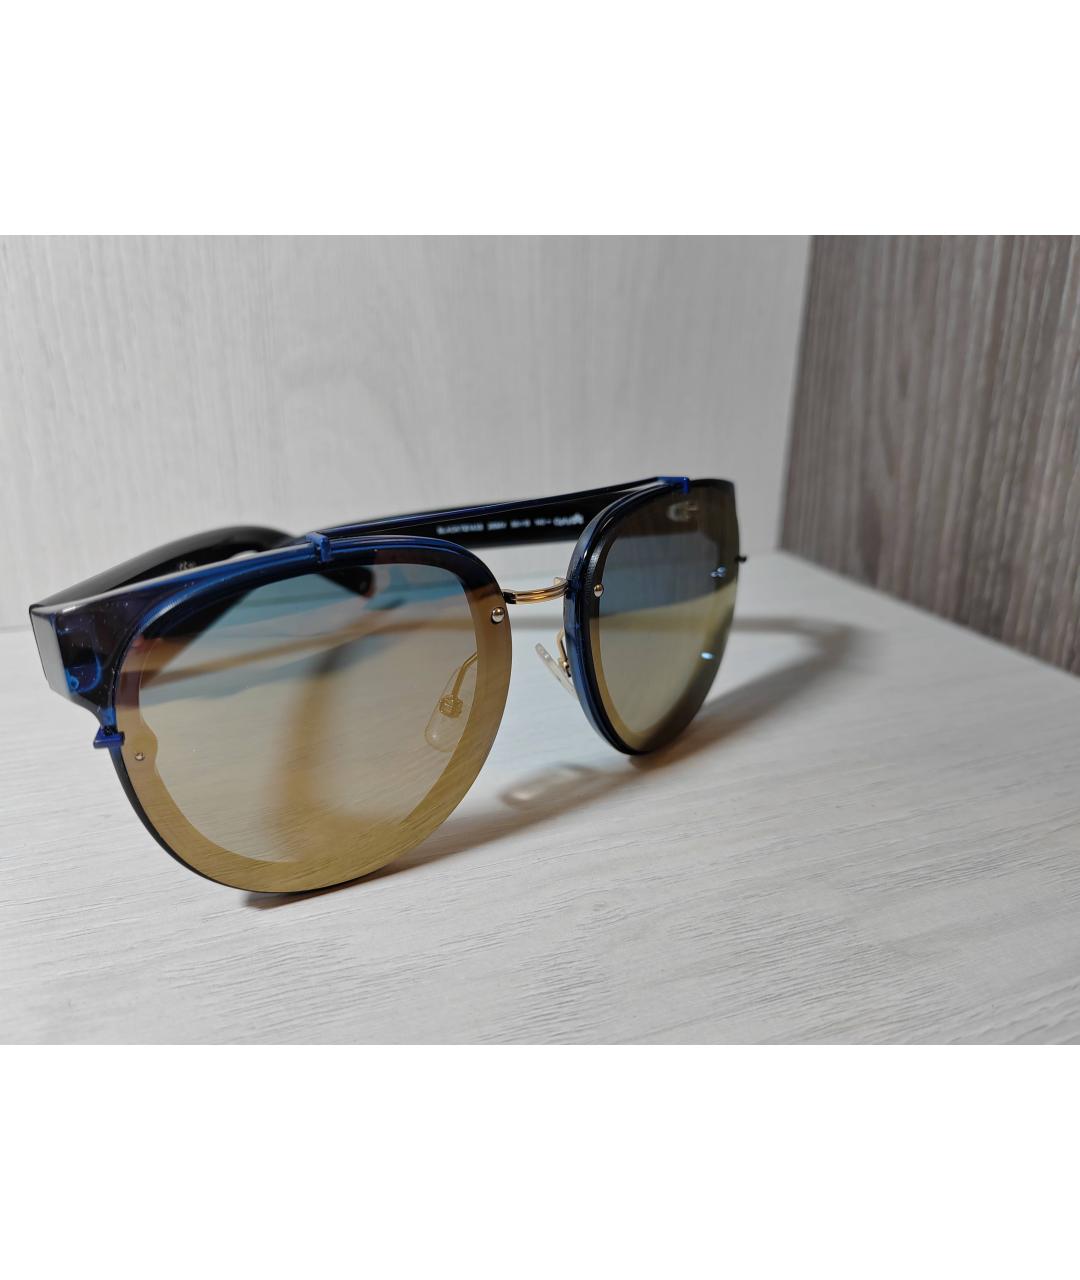 DIOR HOMME Темно-синие пластиковые солнцезащитные очки, фото 5